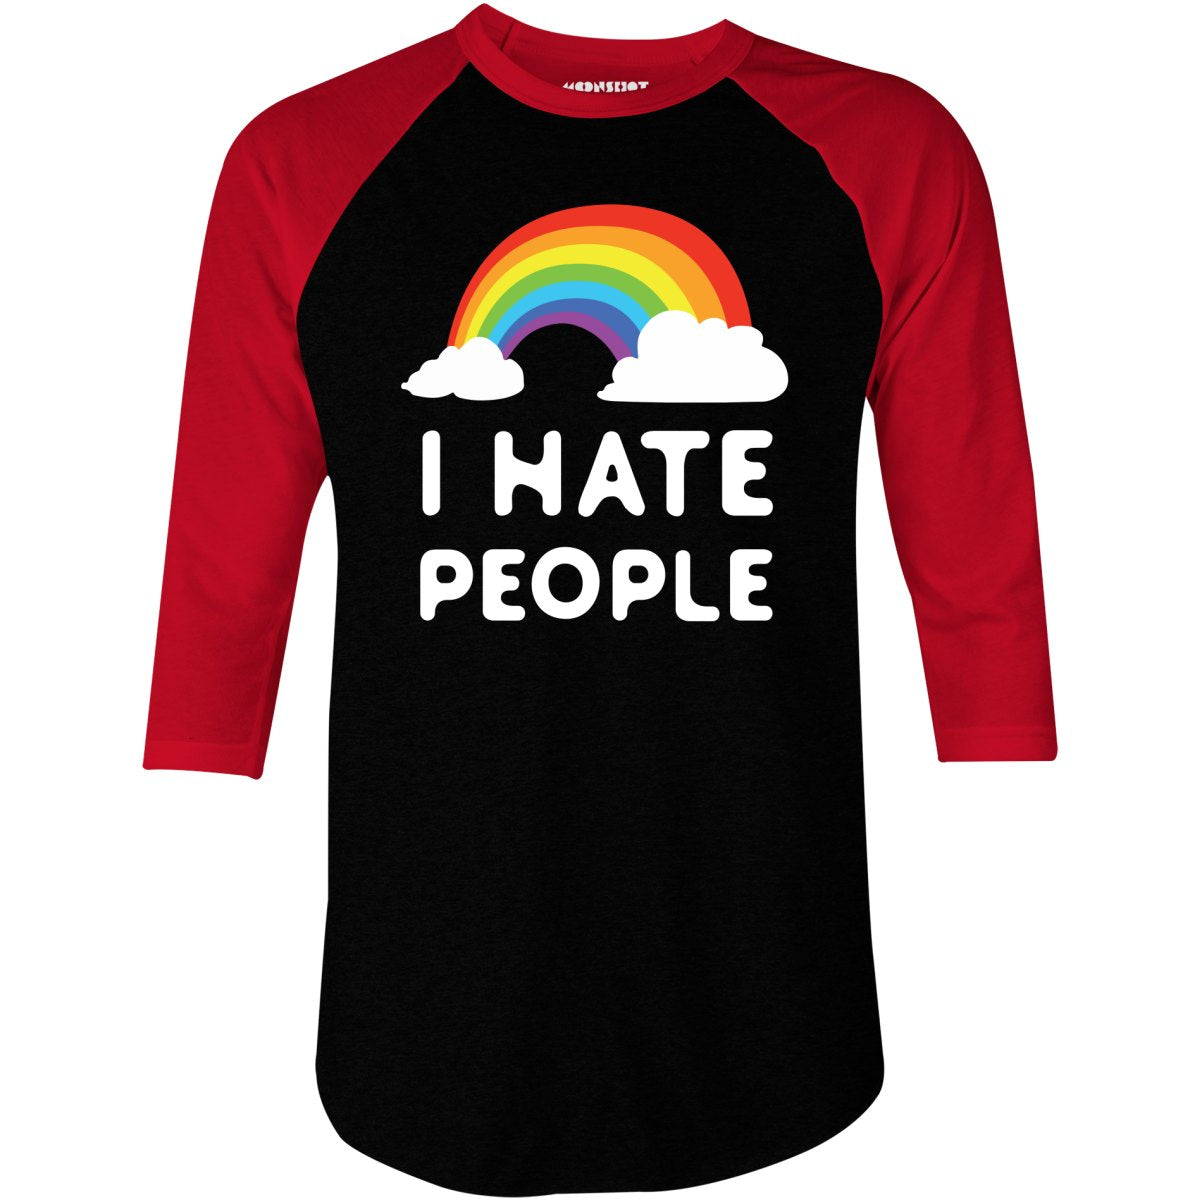 I Hate People - 3/4 Sleeve Raglan T-Shirt